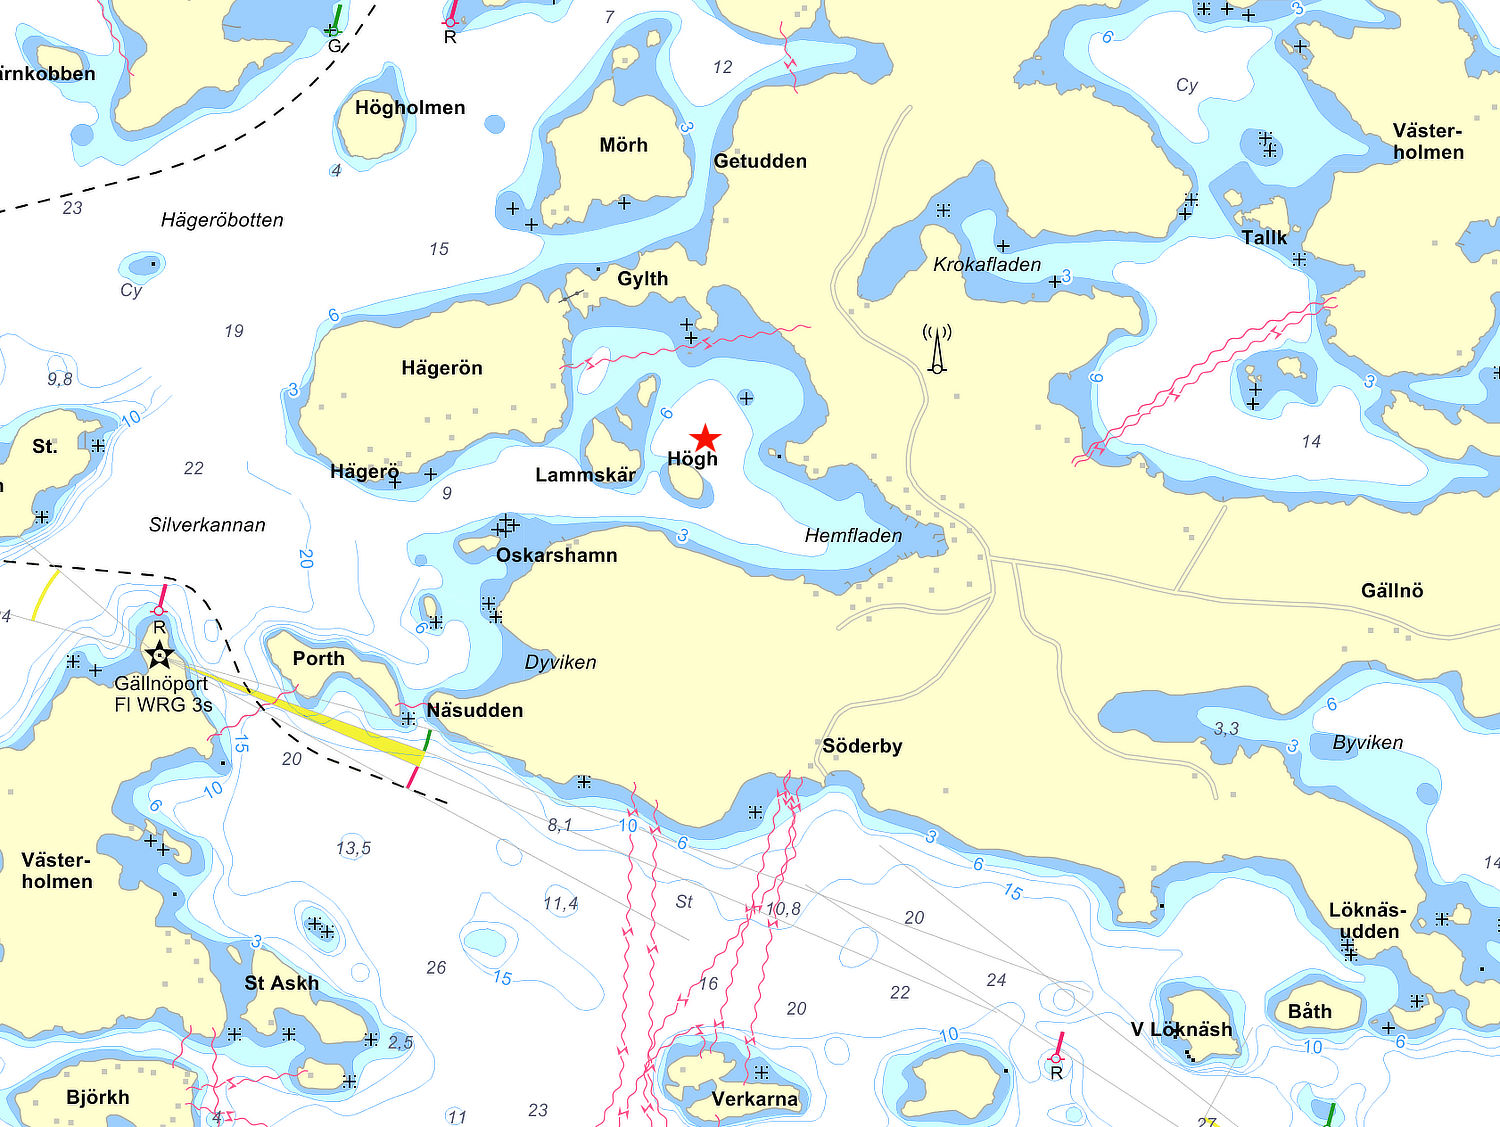 Gällnö Hemfladen in Stockholm's Archipelago | Cruising Attitude Sailing Blog | Discovery 55